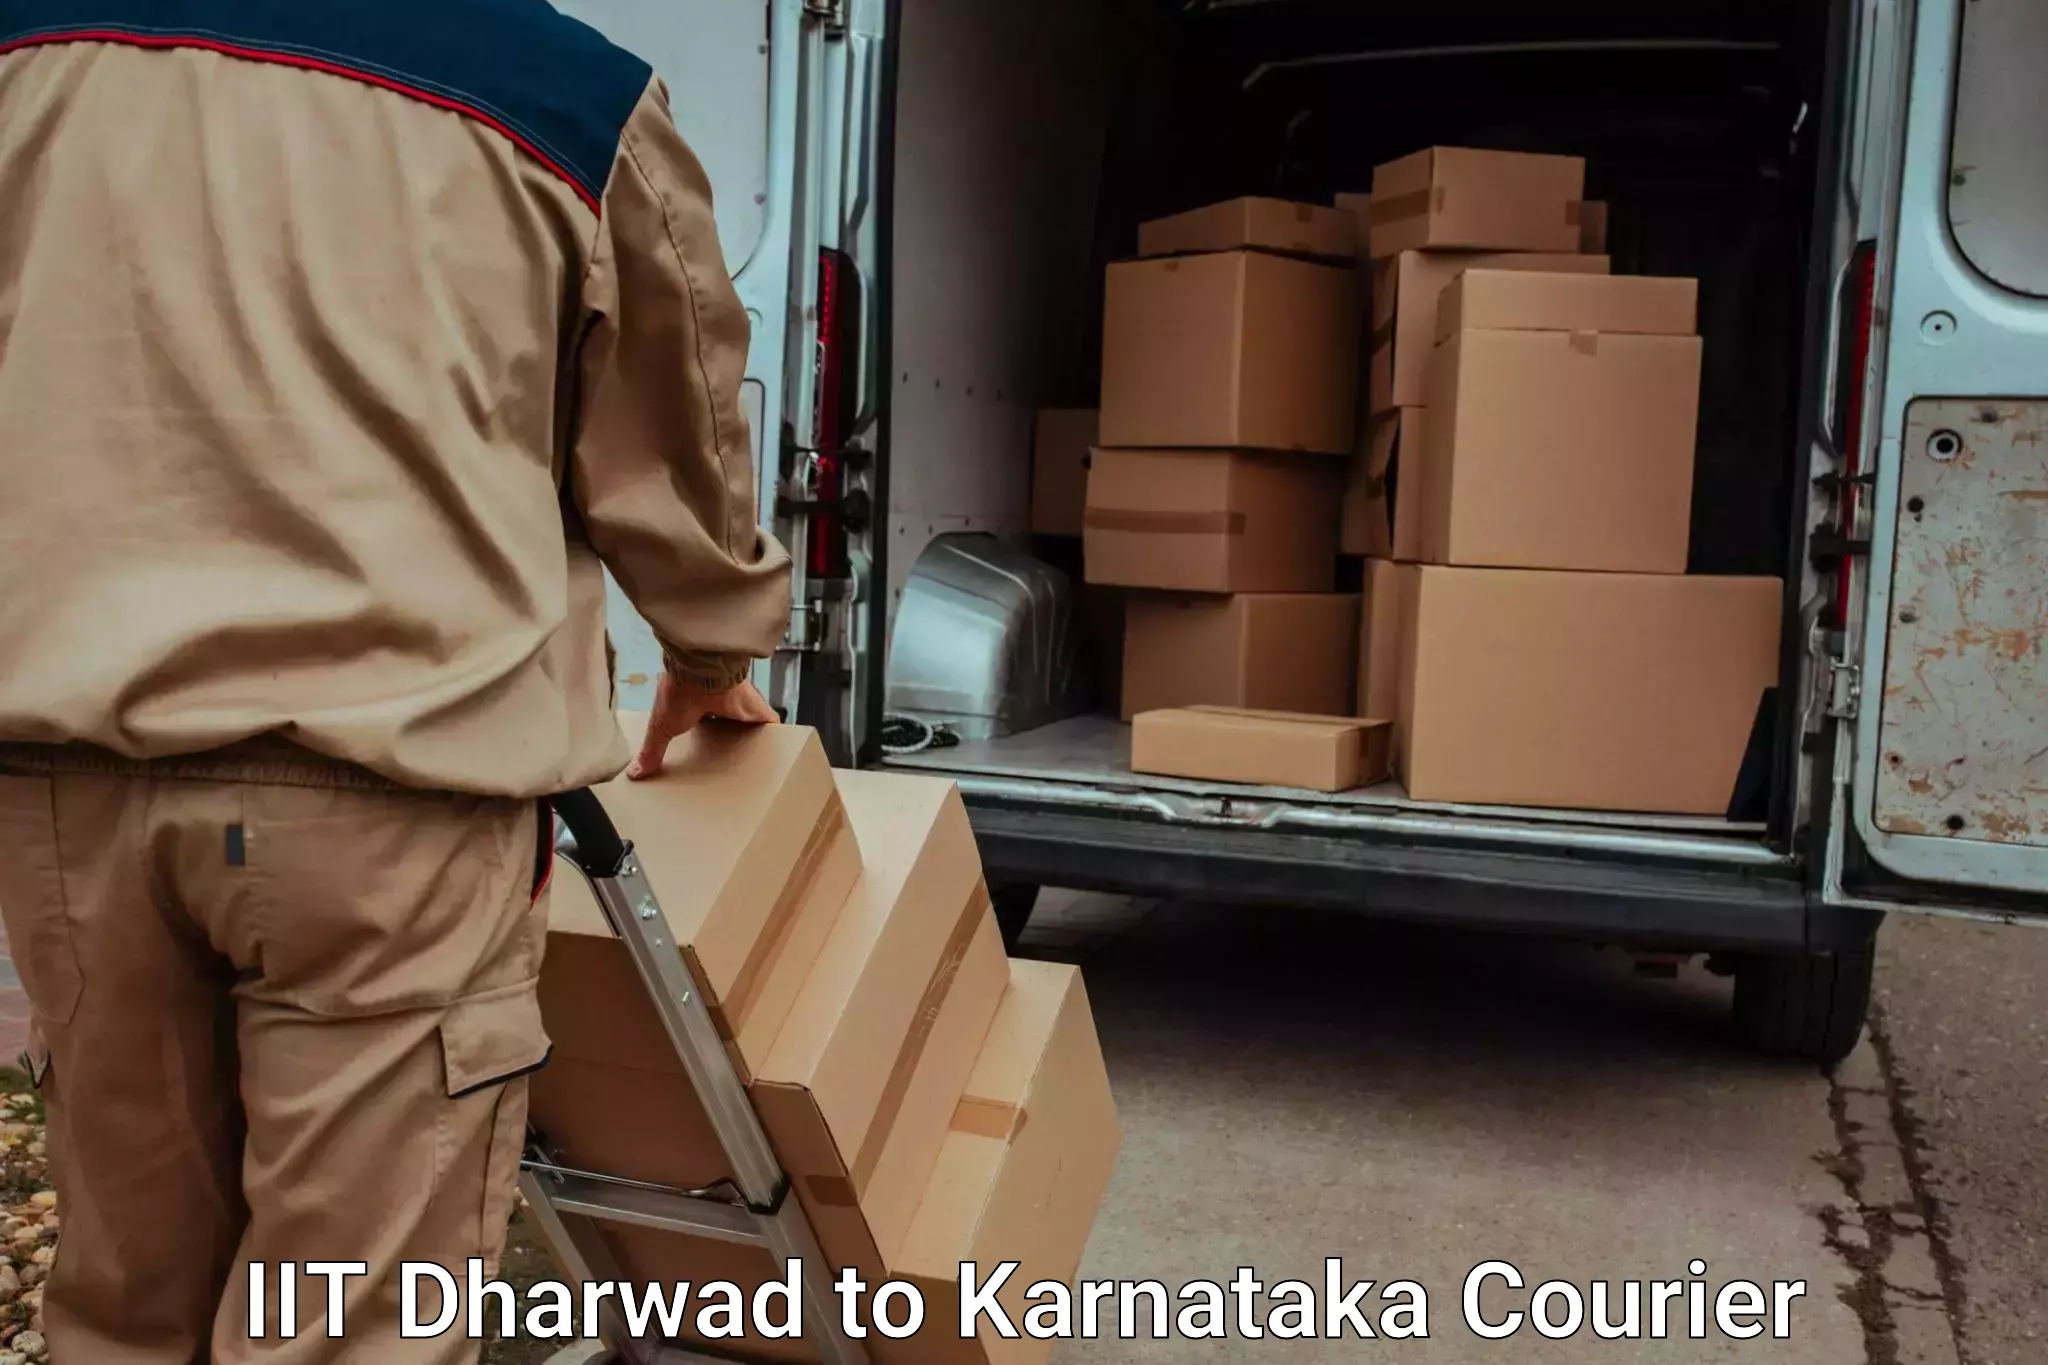 Professional packing services IIT Dharwad to Karnataka